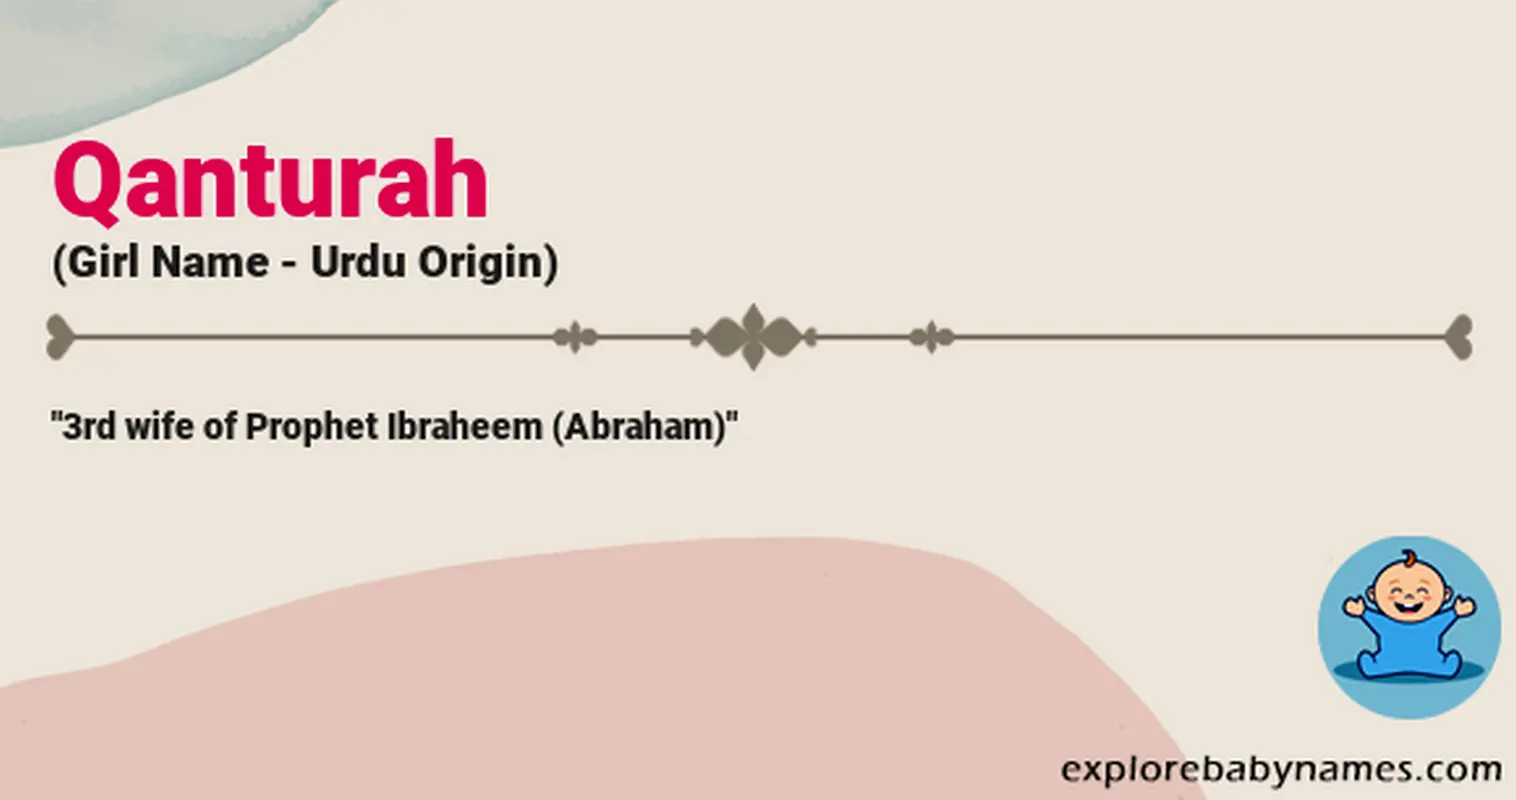 Meaning of Qanturah